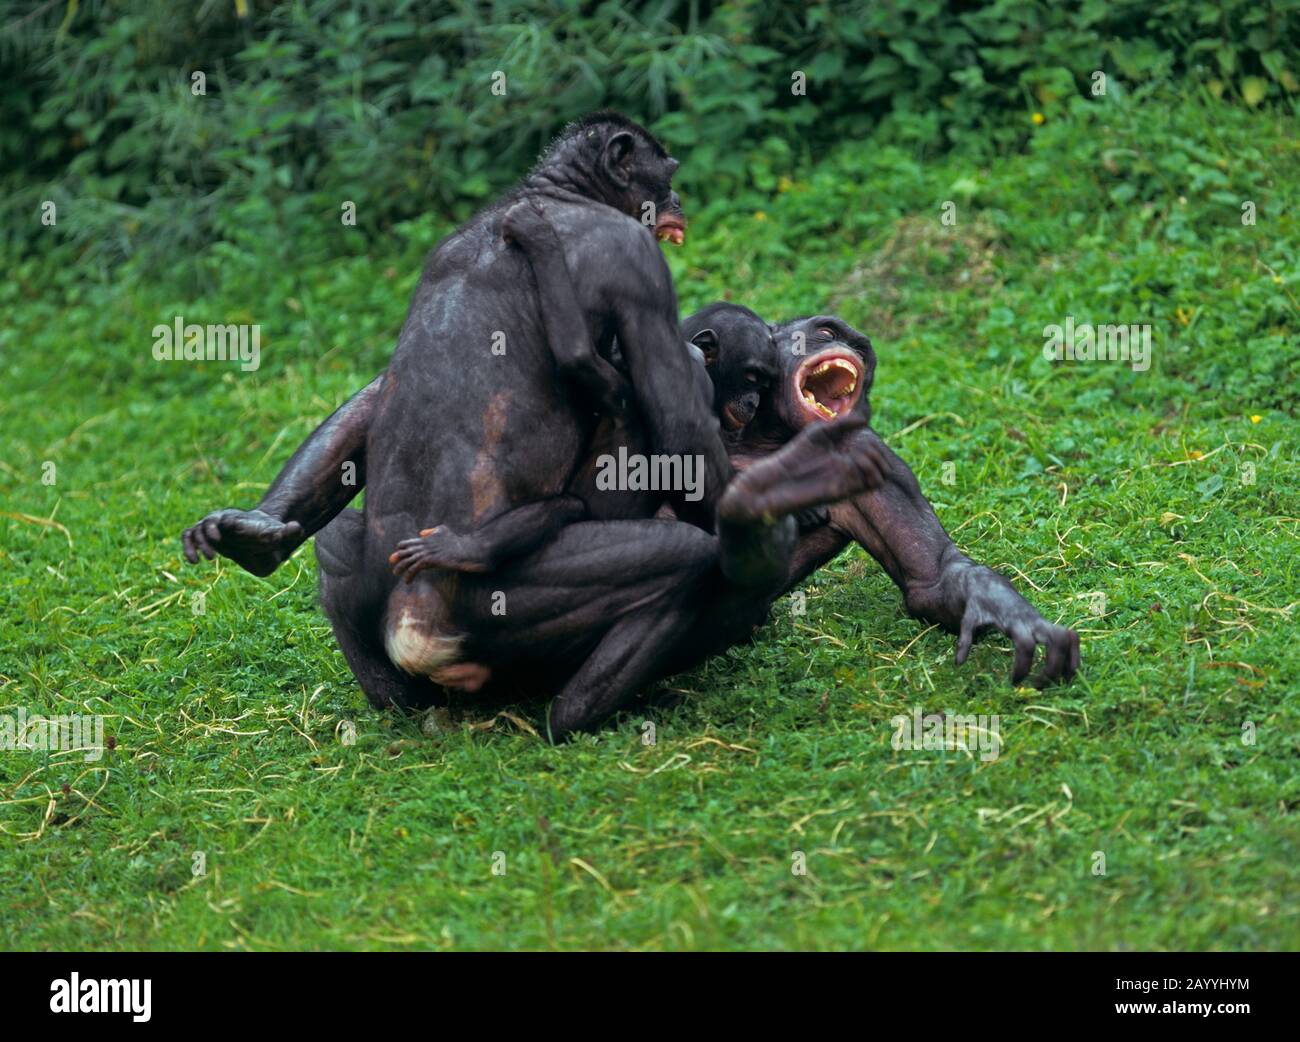 bonobo, pygmy chimpanzee (Pan paniscus), mating in a meadow Stock Photo